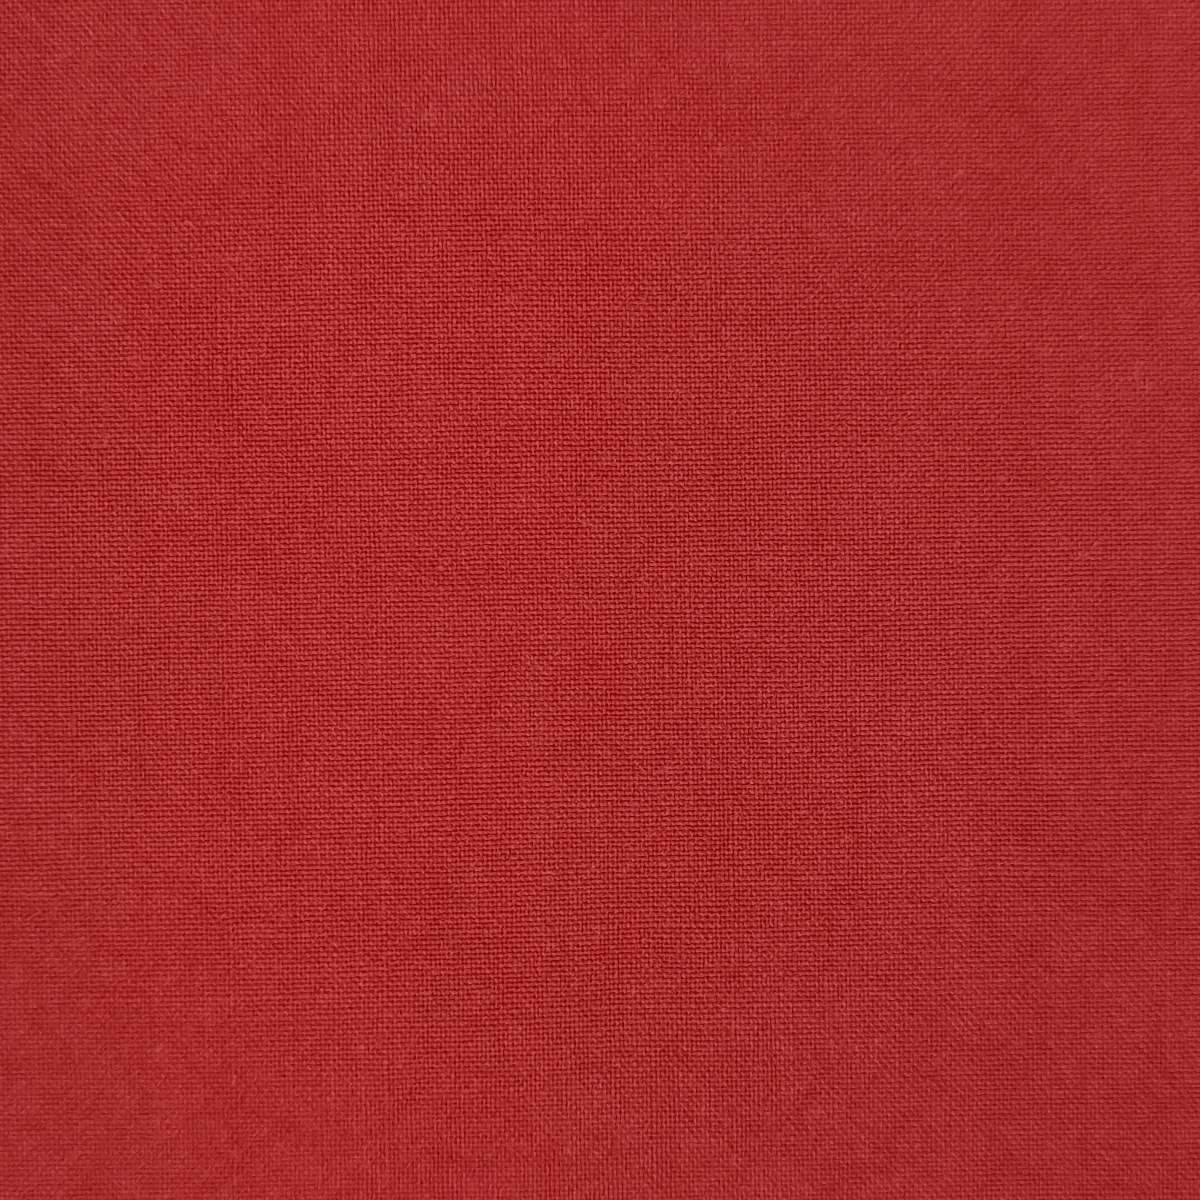 Cotton Woven Fabric-Brick Red